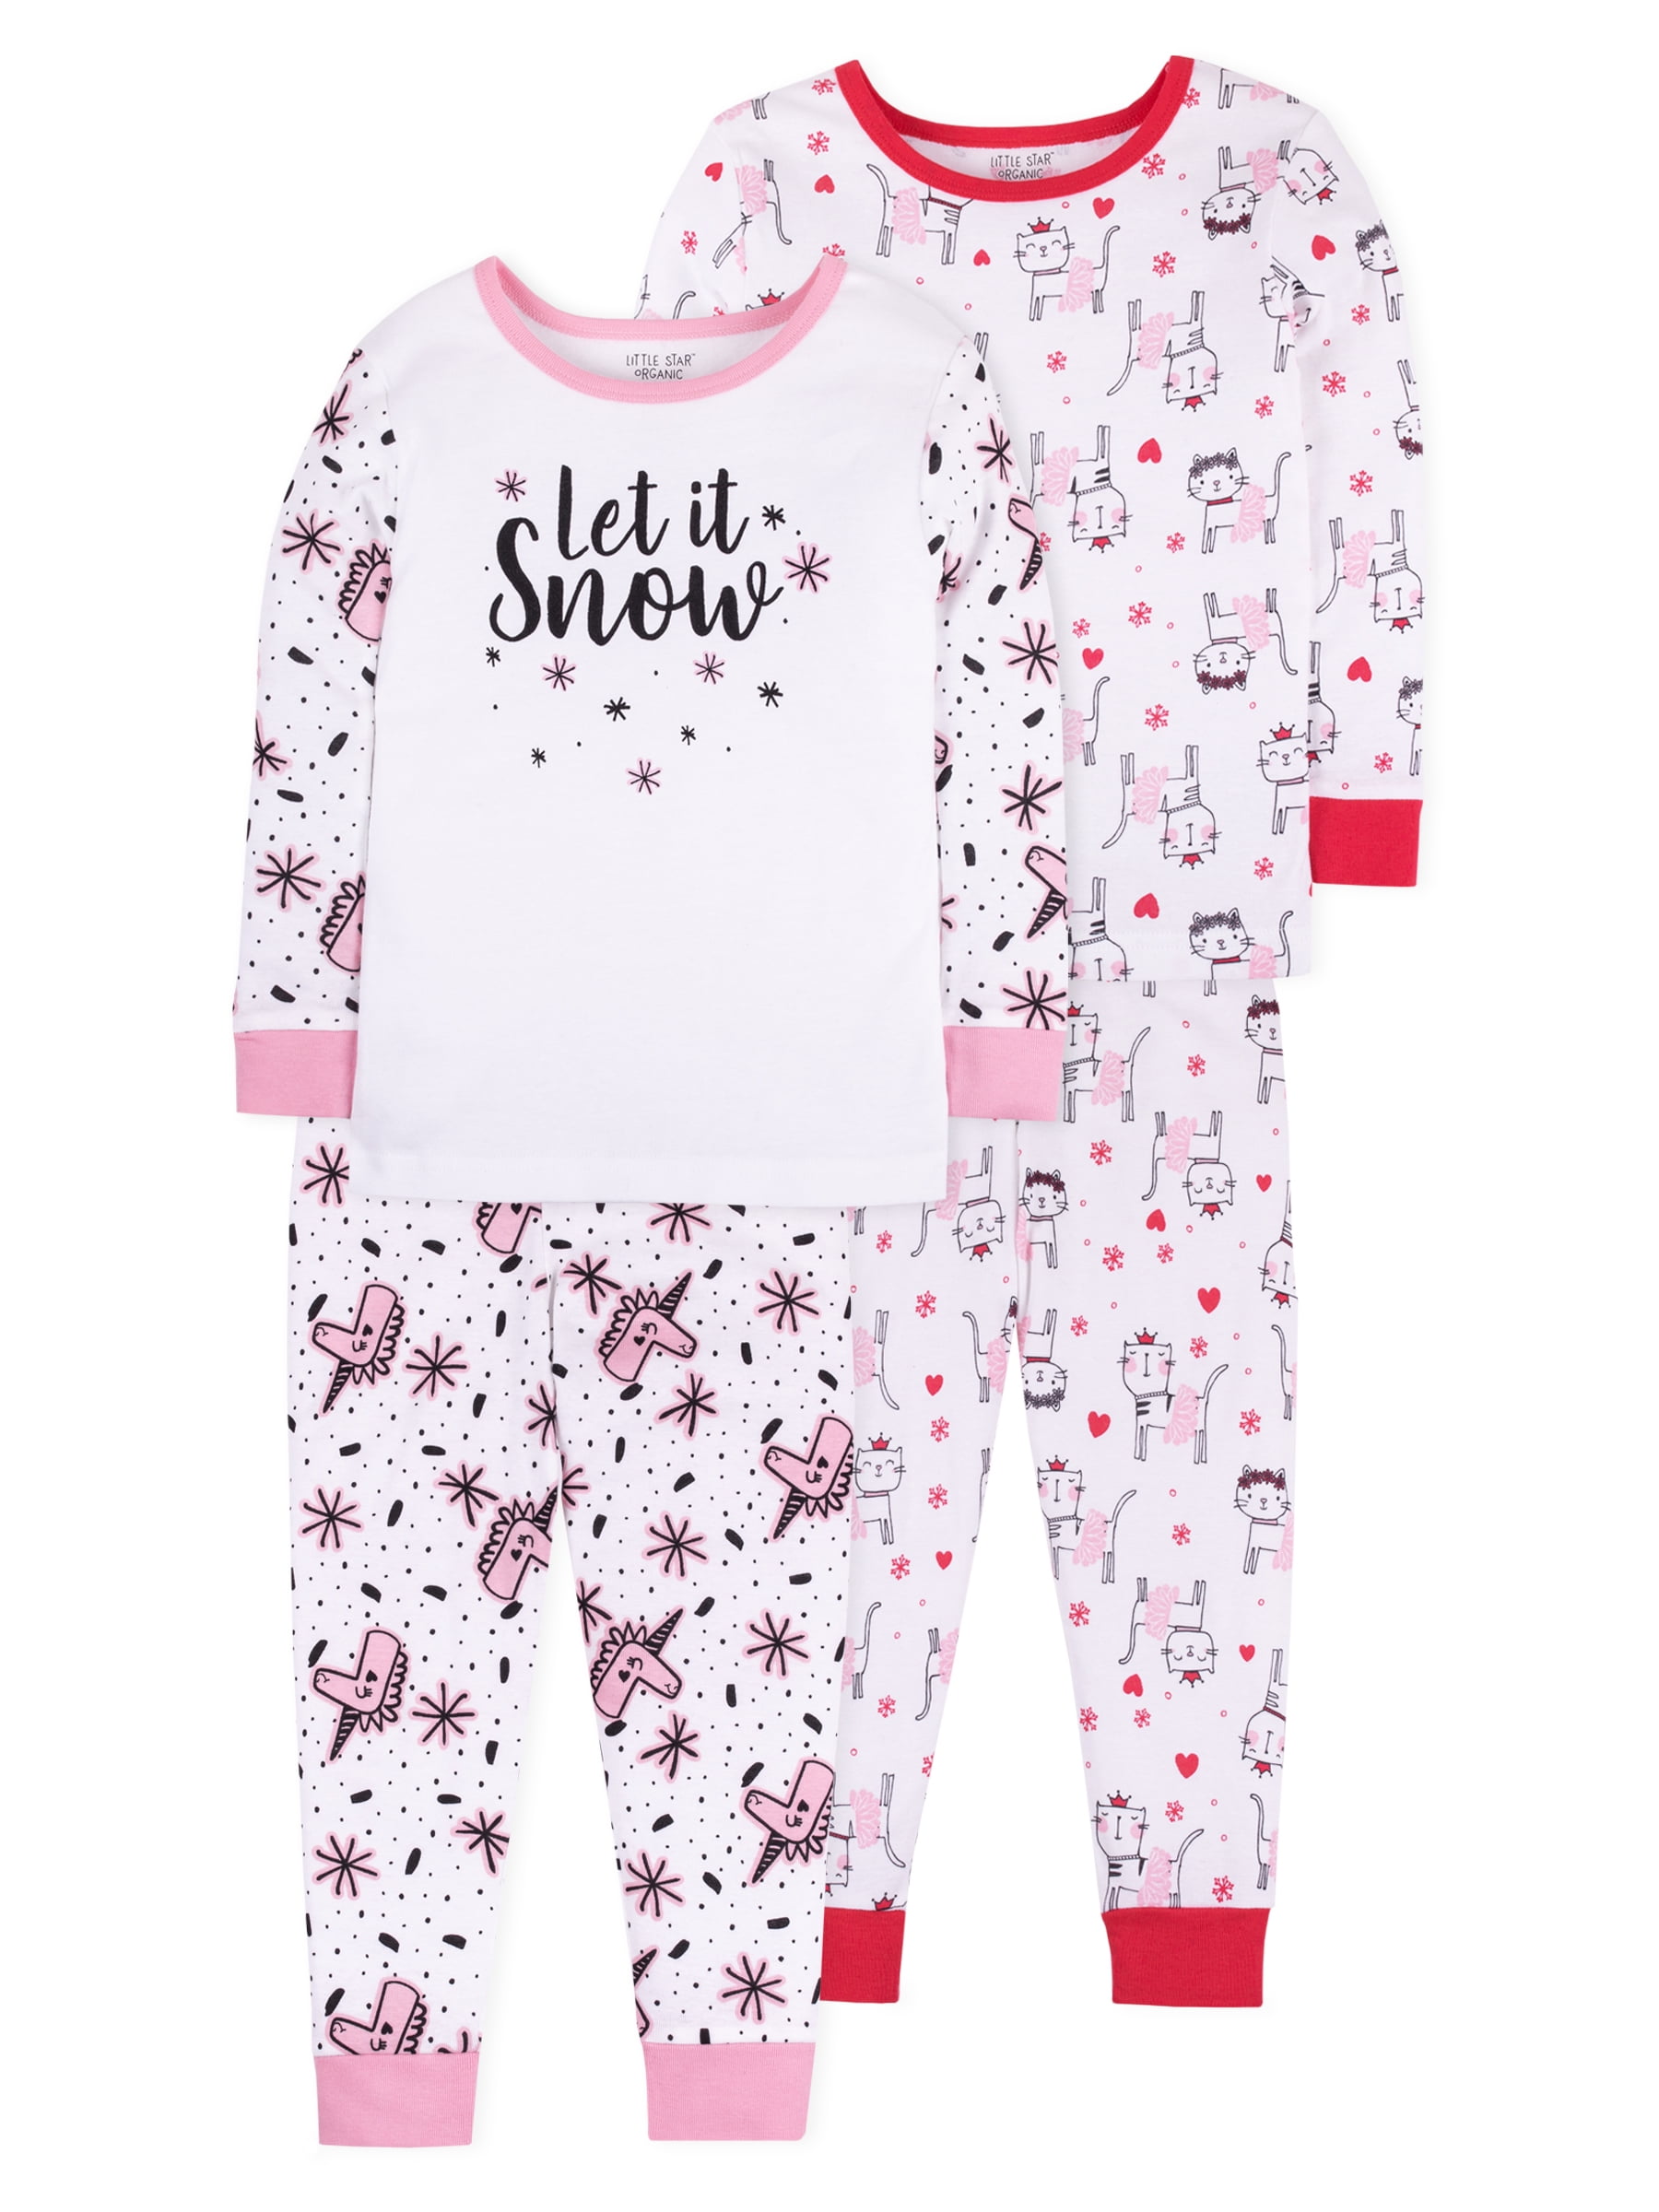 Personalised Science Girl Pyjamas Toddler Pyjamas Girls Pjs Girls Christmas Gifts Kids Chemistry